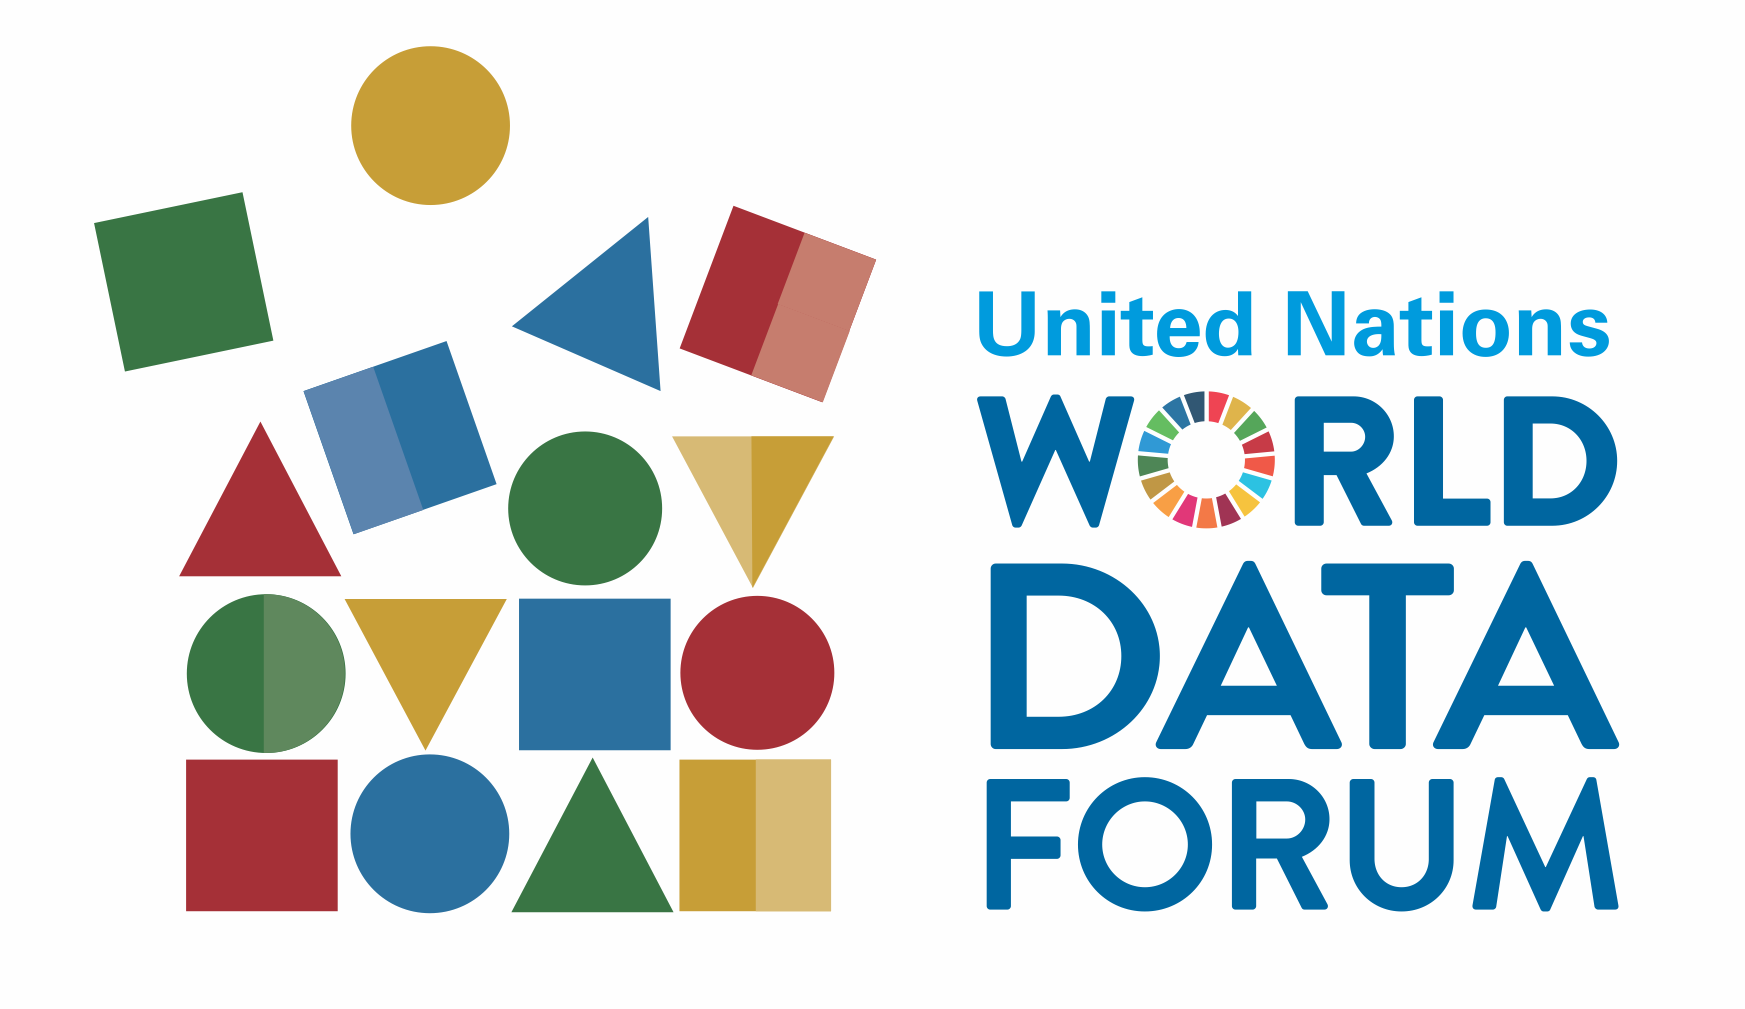 UN Data Forum World Data Forum